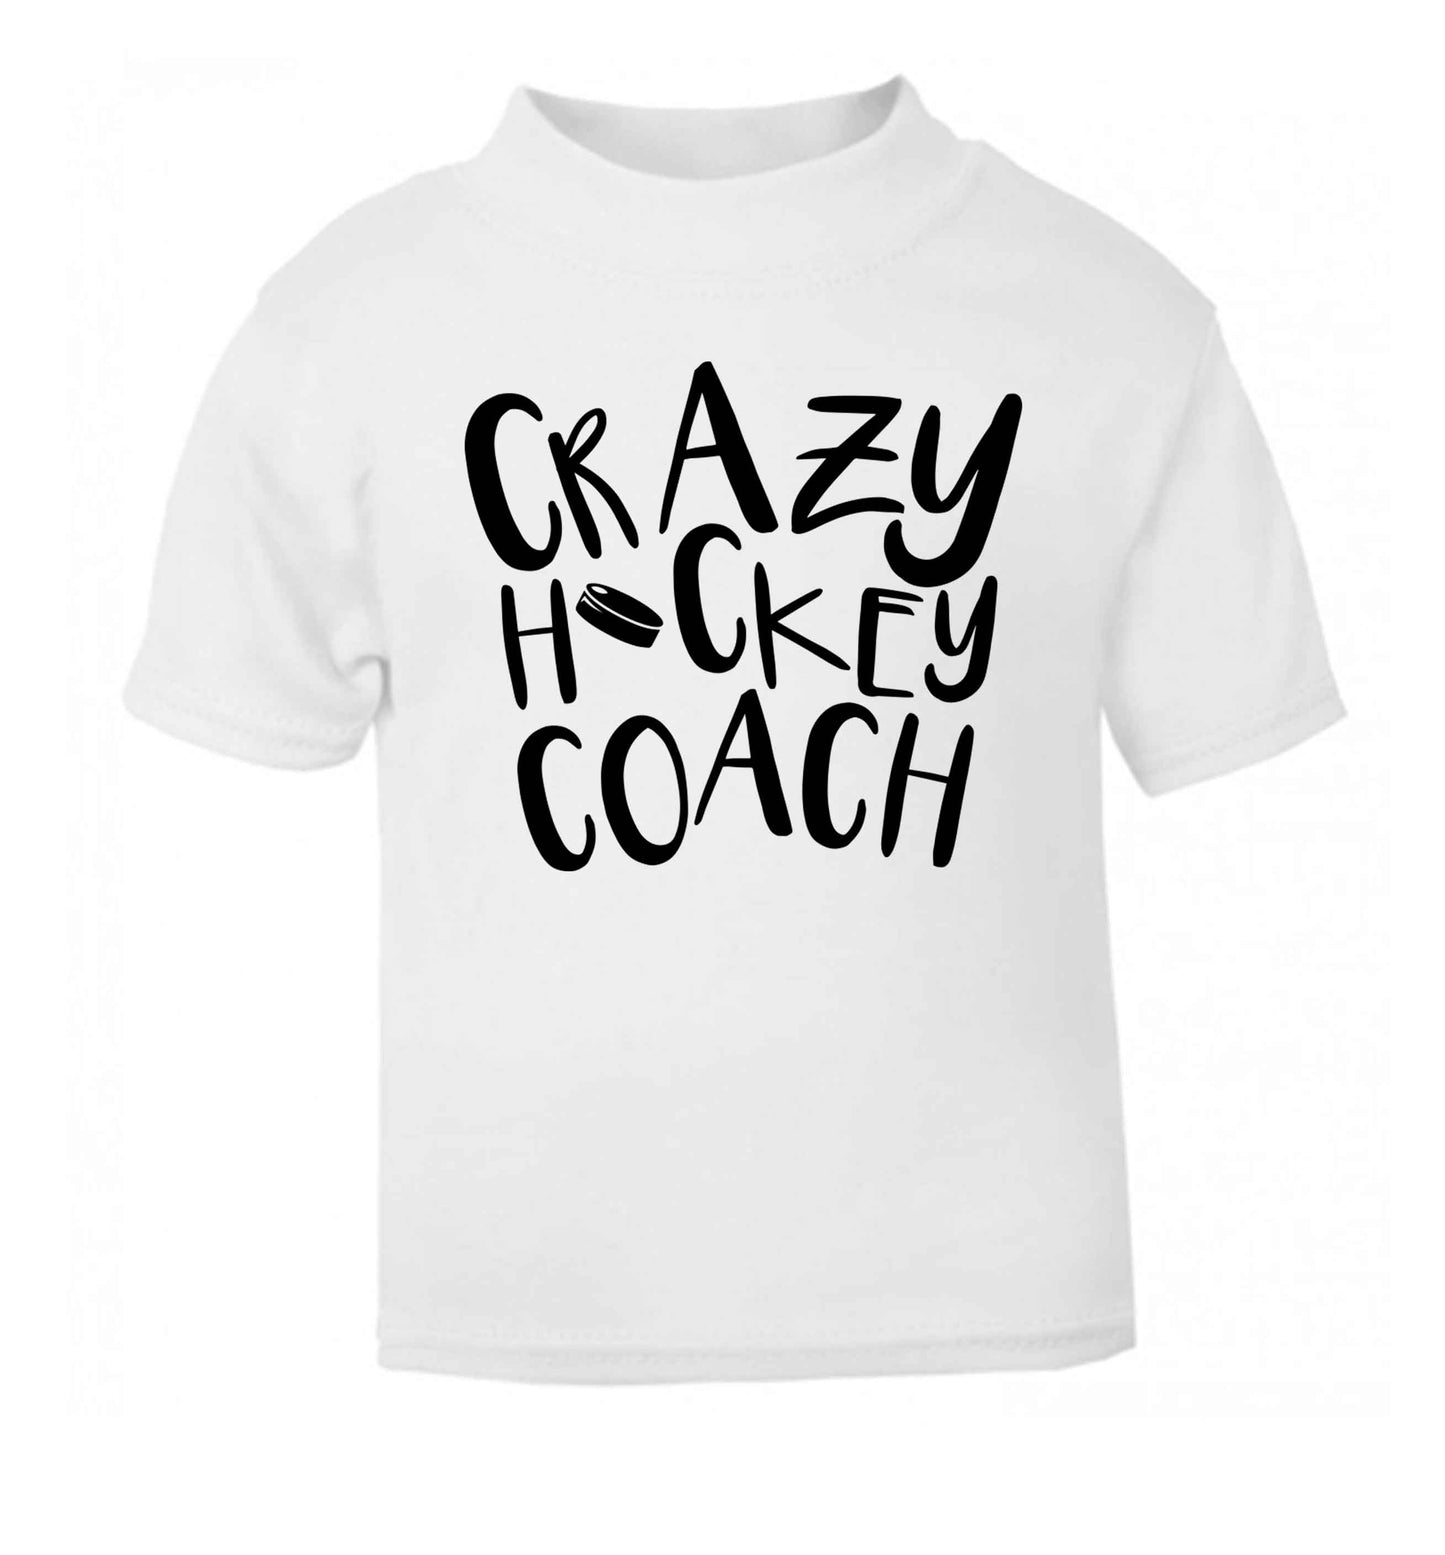 Crazy hockey coach white Baby Toddler Tshirt 2 Years